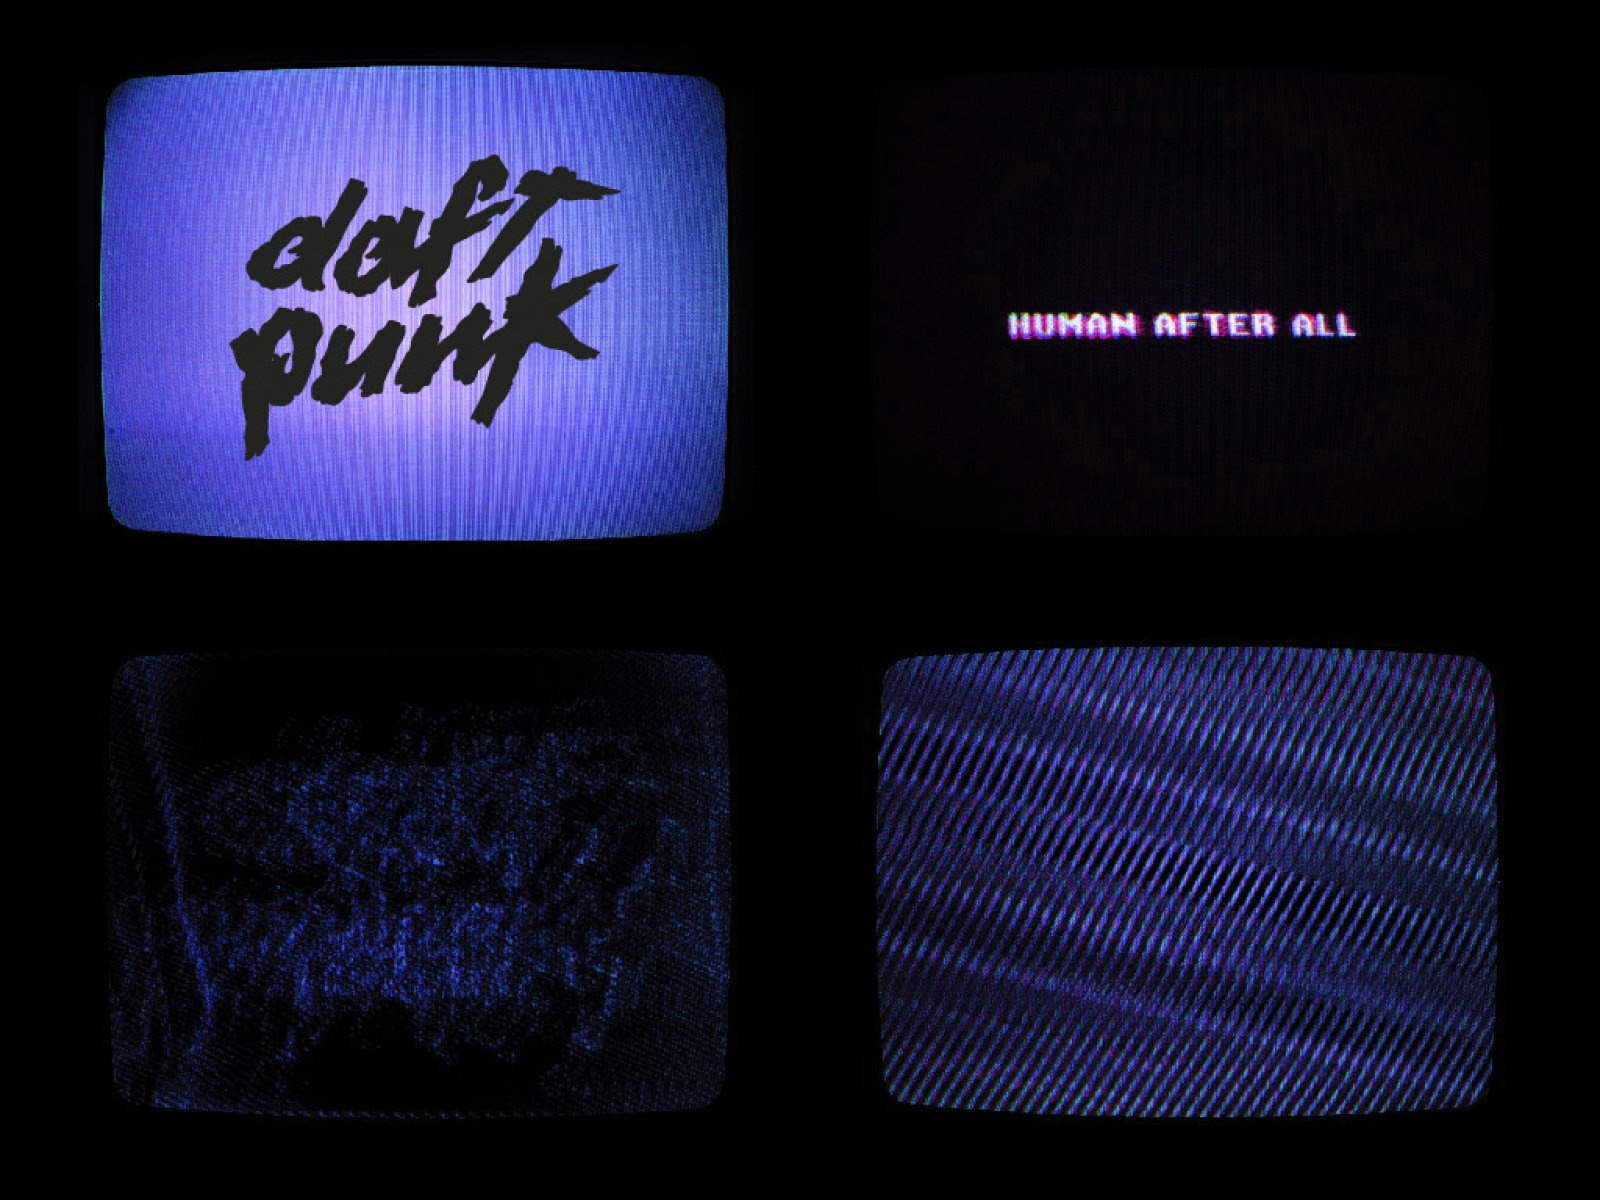 daft, Punk, Dubstep, Electro, House, Dance, Disco, Electronic, Robot, Cyborg Wallpaper